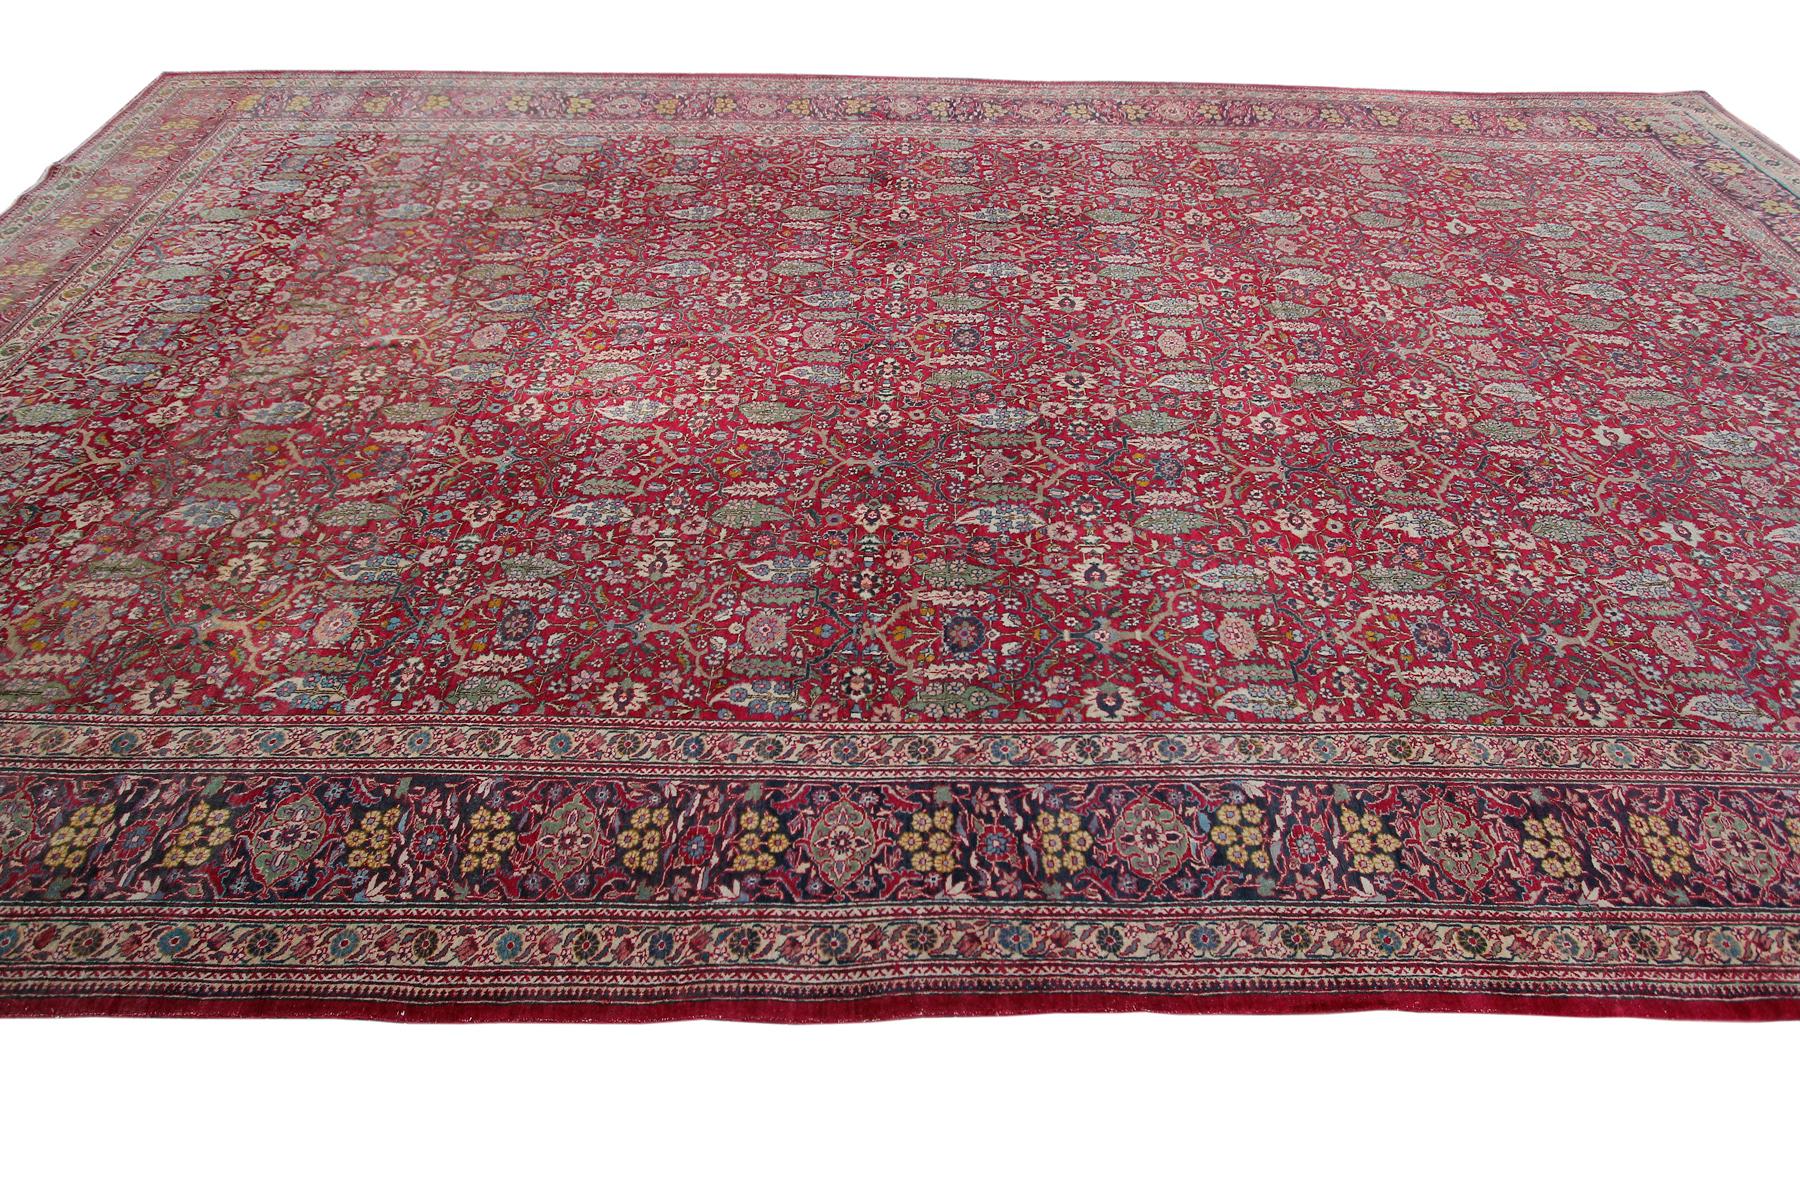 1890 Antique Haji Jalili Rug Antique Persian Rug Geometric Leaf Overall For Sale 2